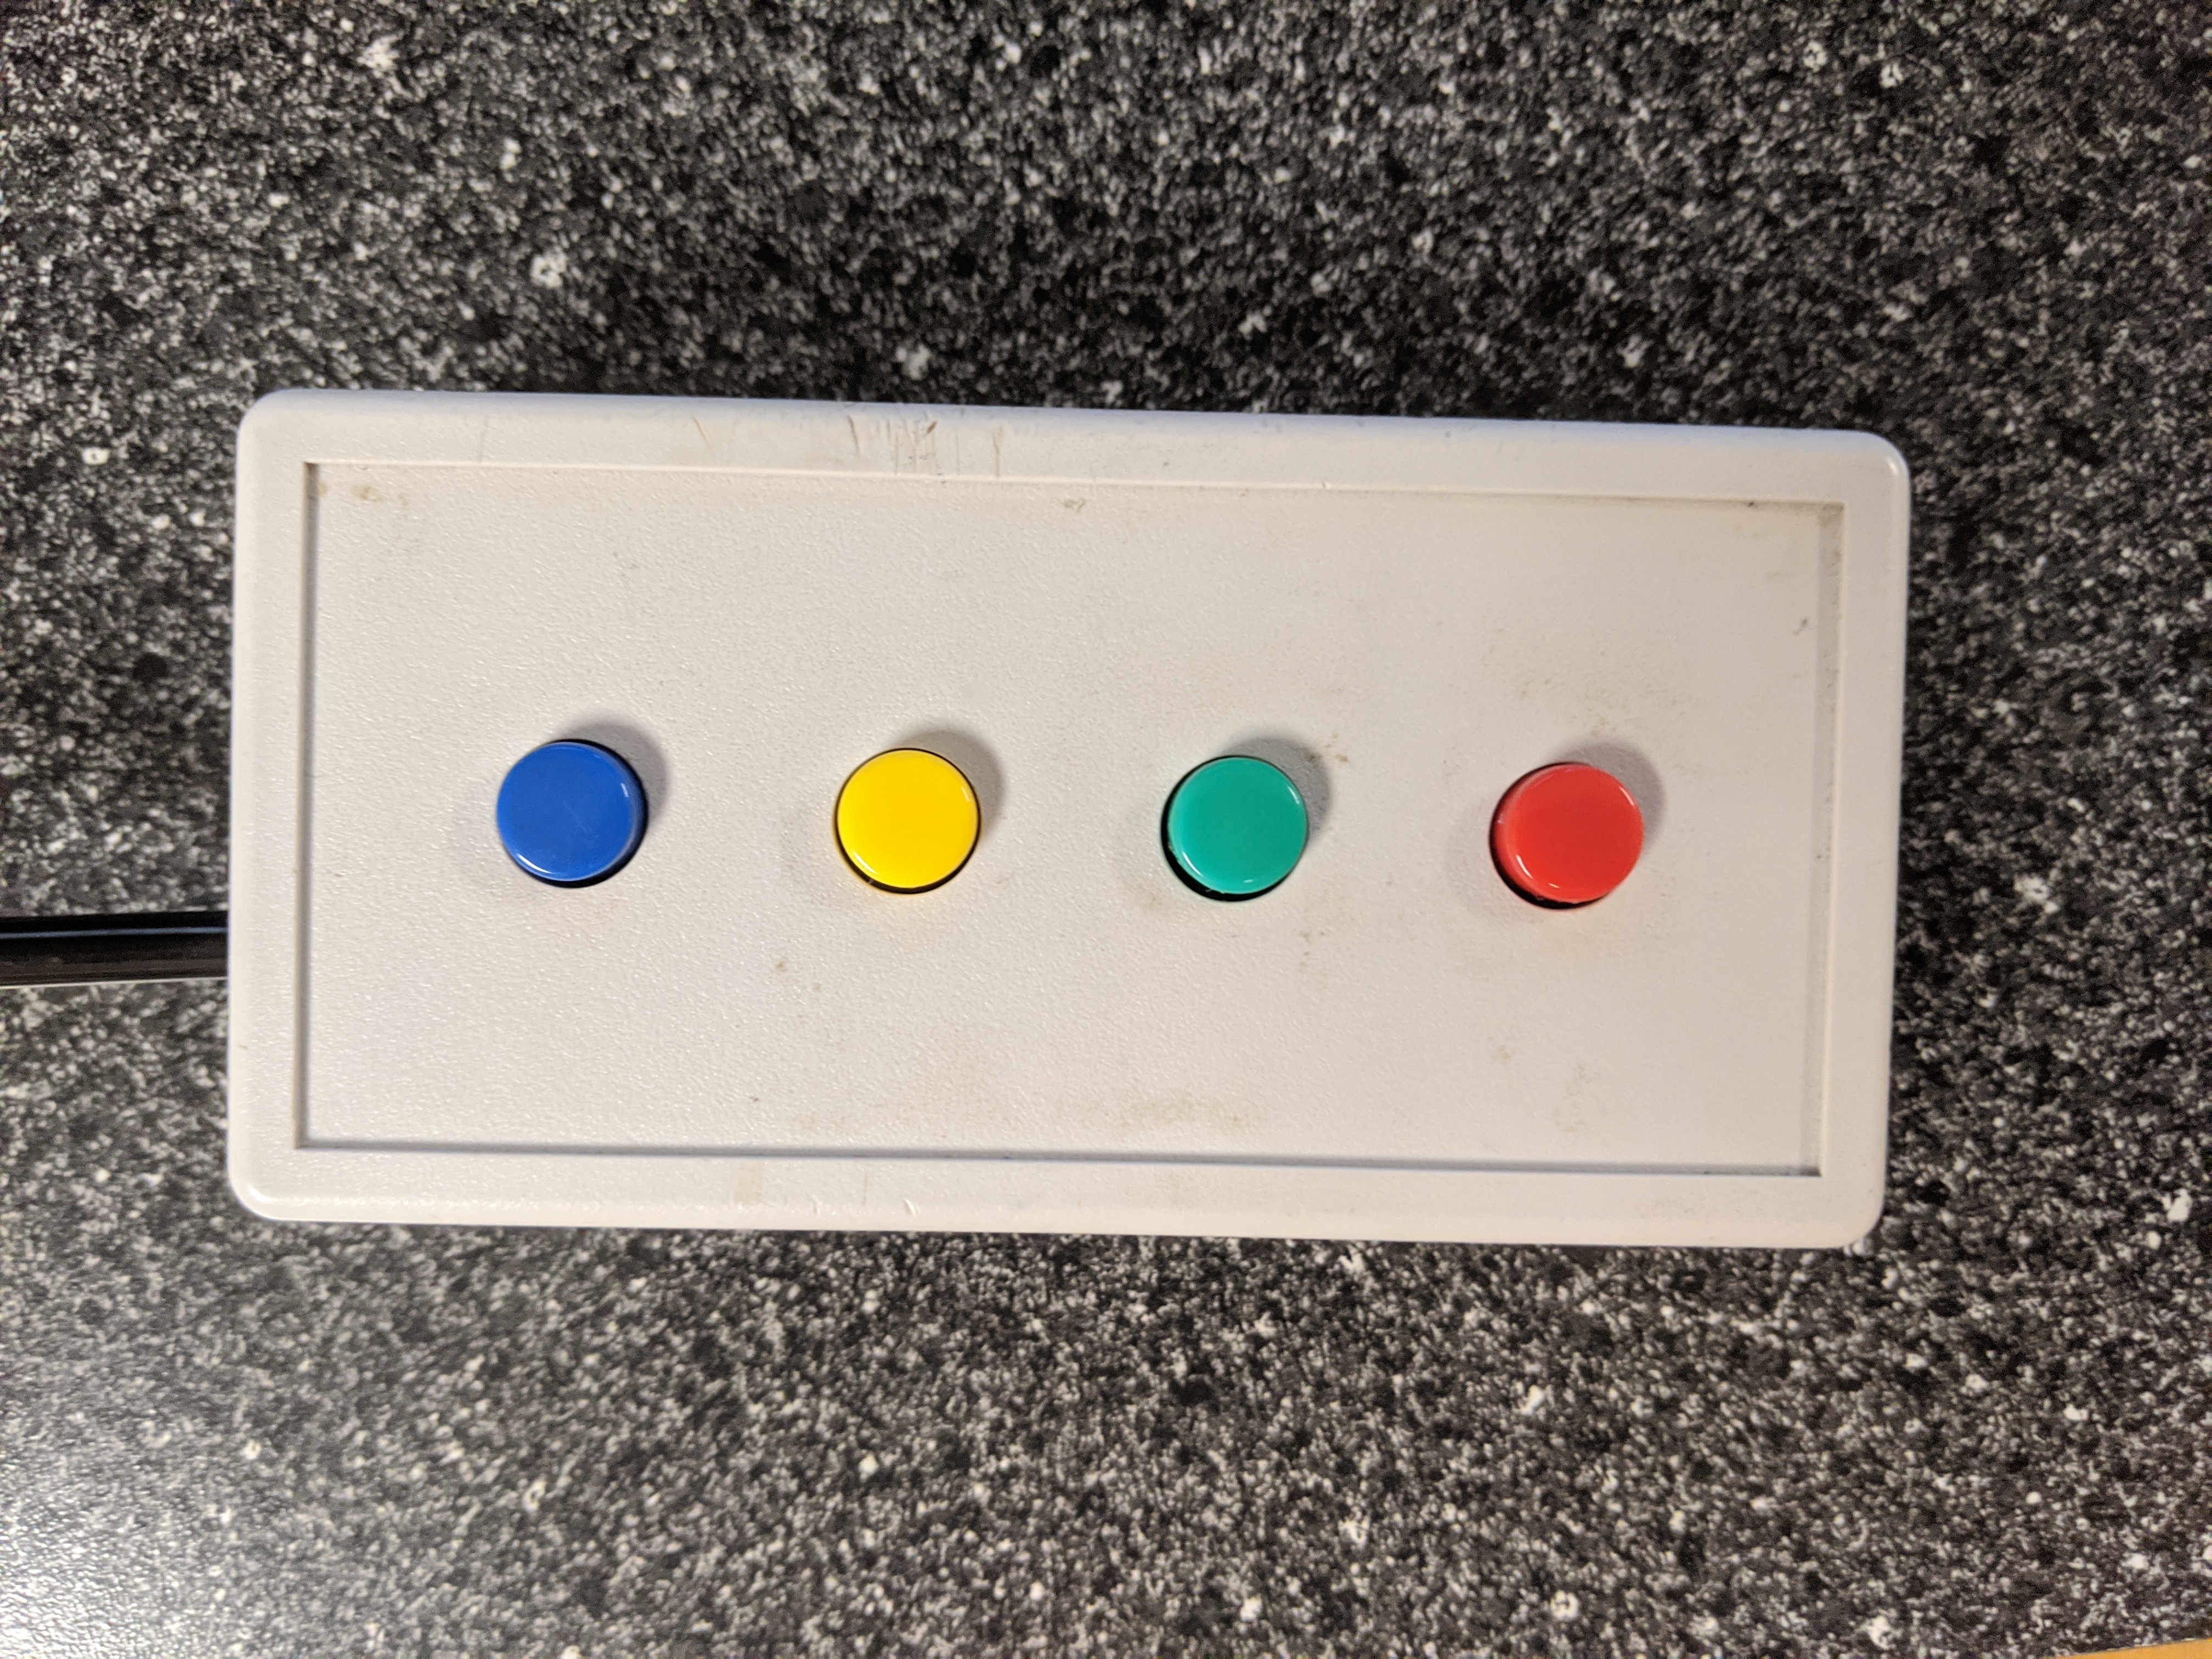 4 button box